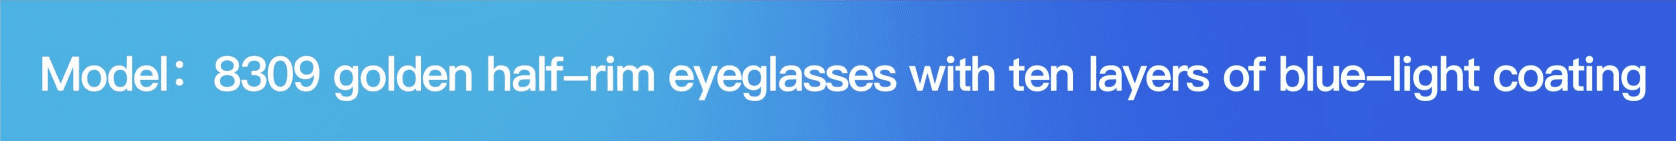 reading glasses model 8309 golden half-rim eyeglasses with ten layers of blue-light coating